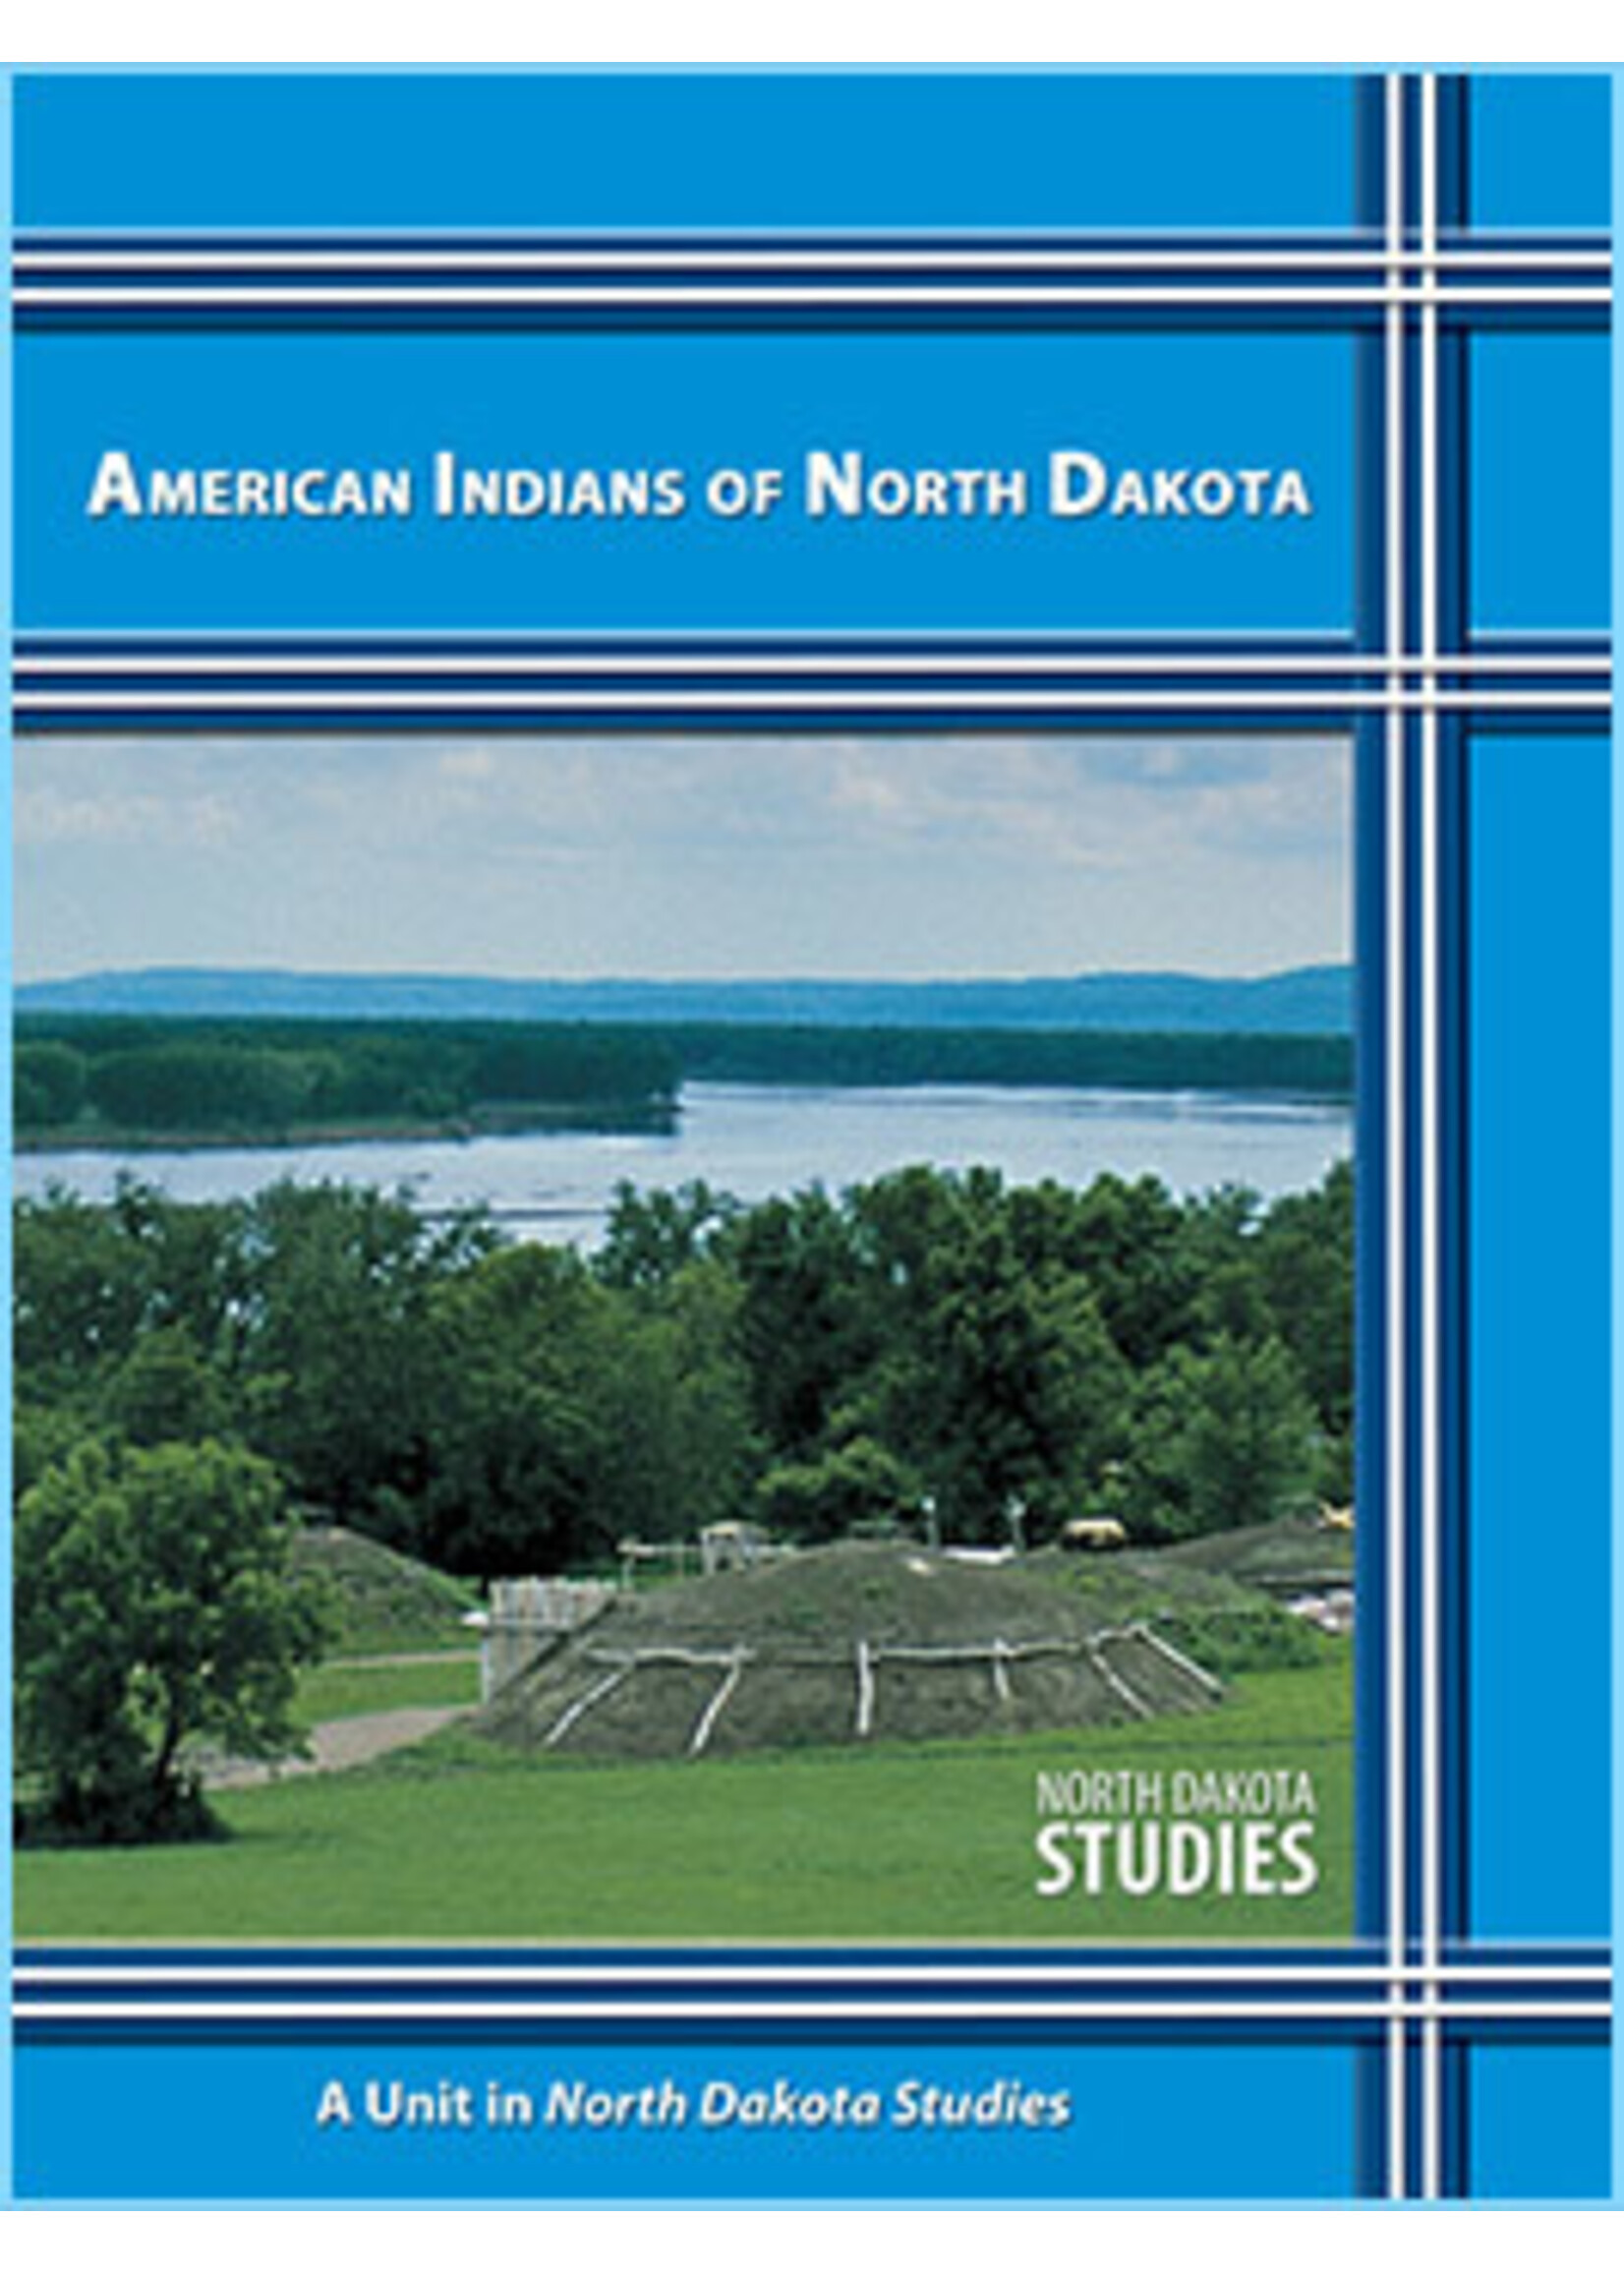 North Dakota Studies: American Indians of North Dakota